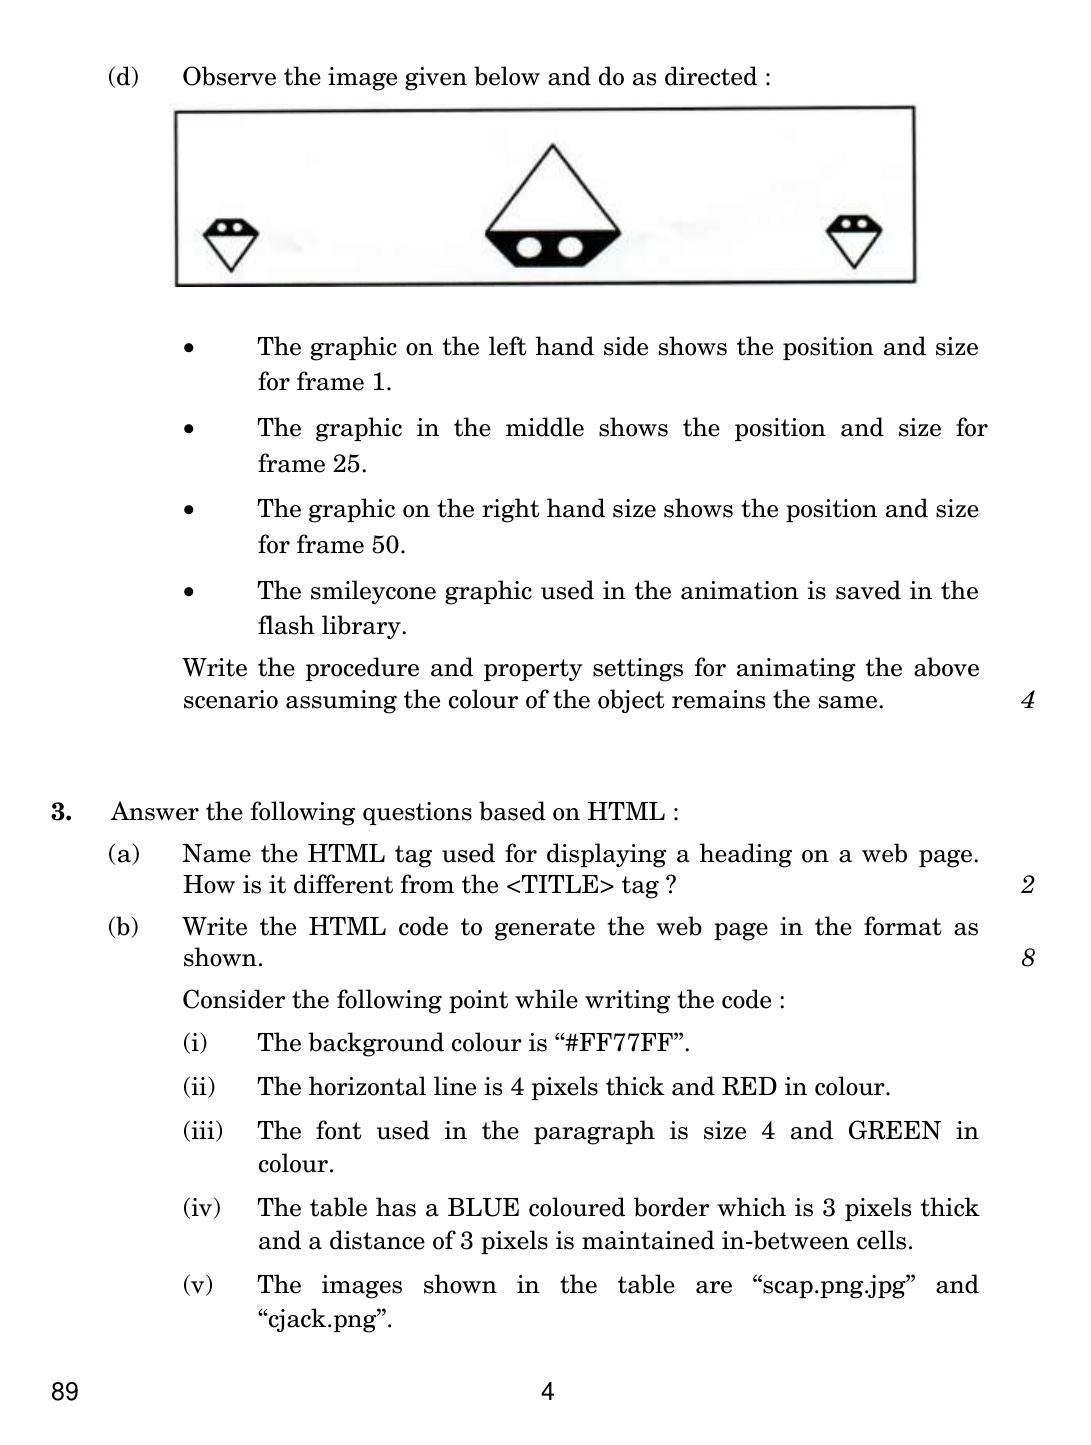 CBSE Class 12 89 MULTIMEDIA & WEB TECH. 2019 Compartment Question Paper - Page 4